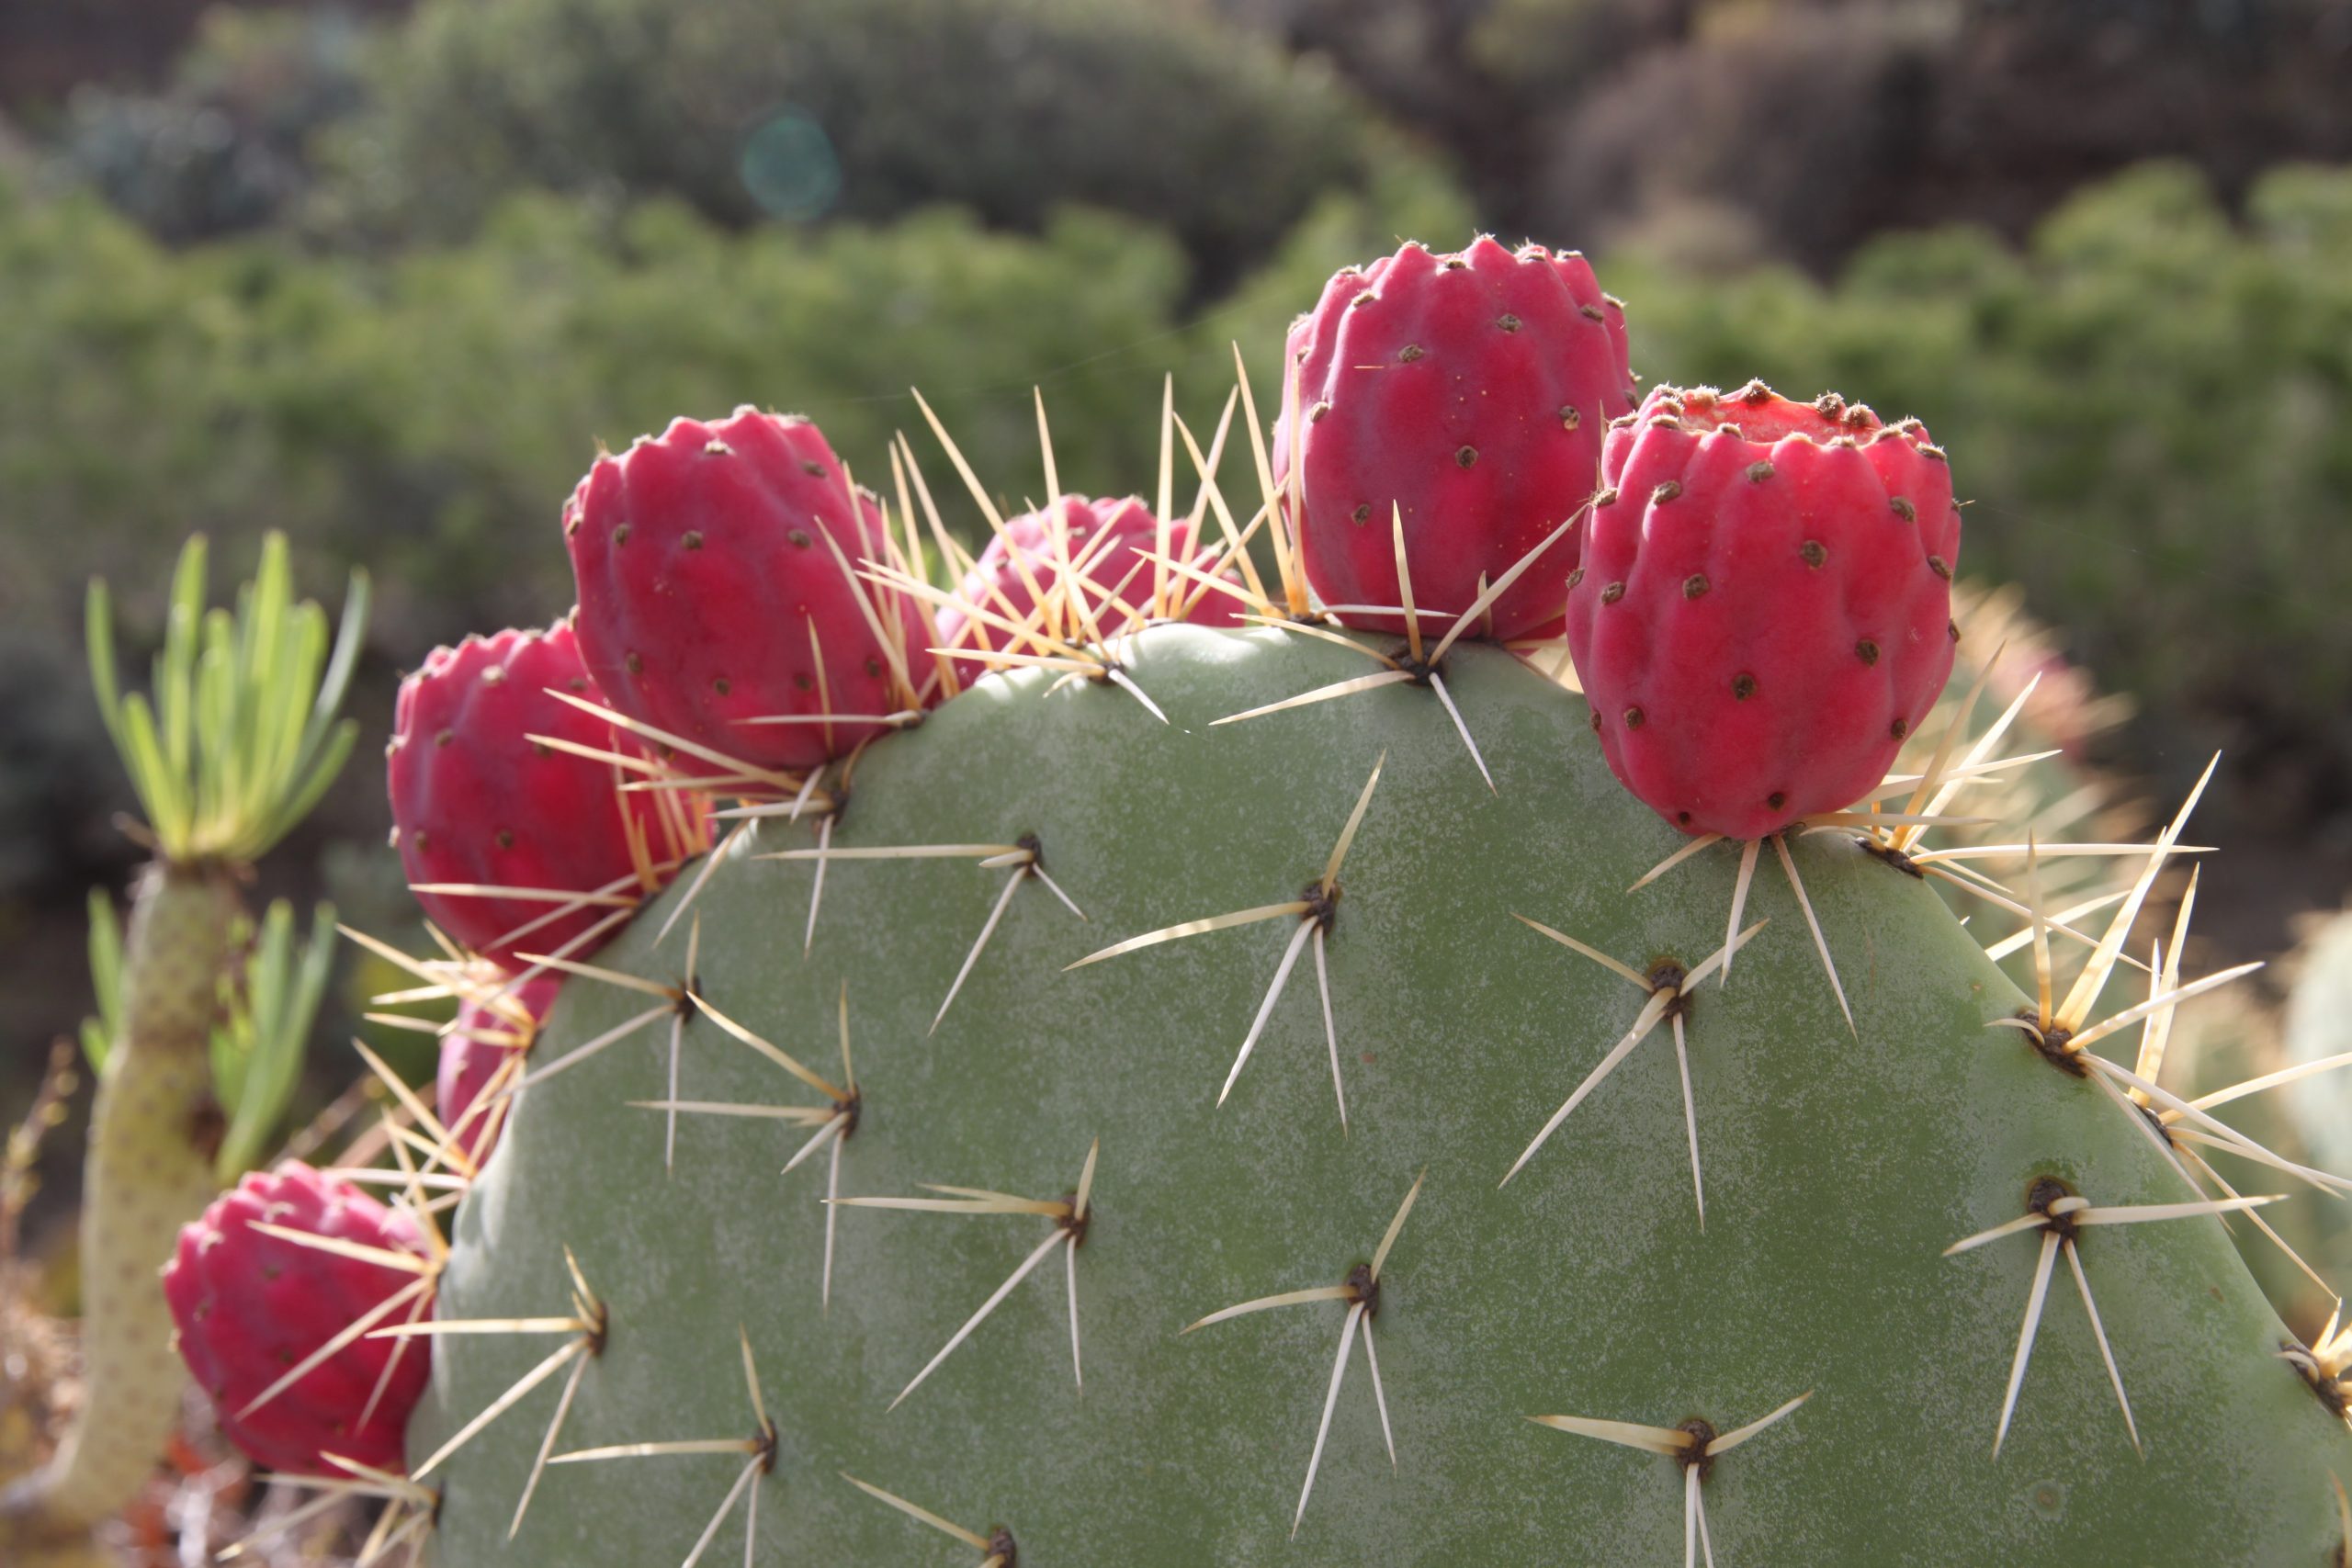 When to visit Gran Canaria cactus